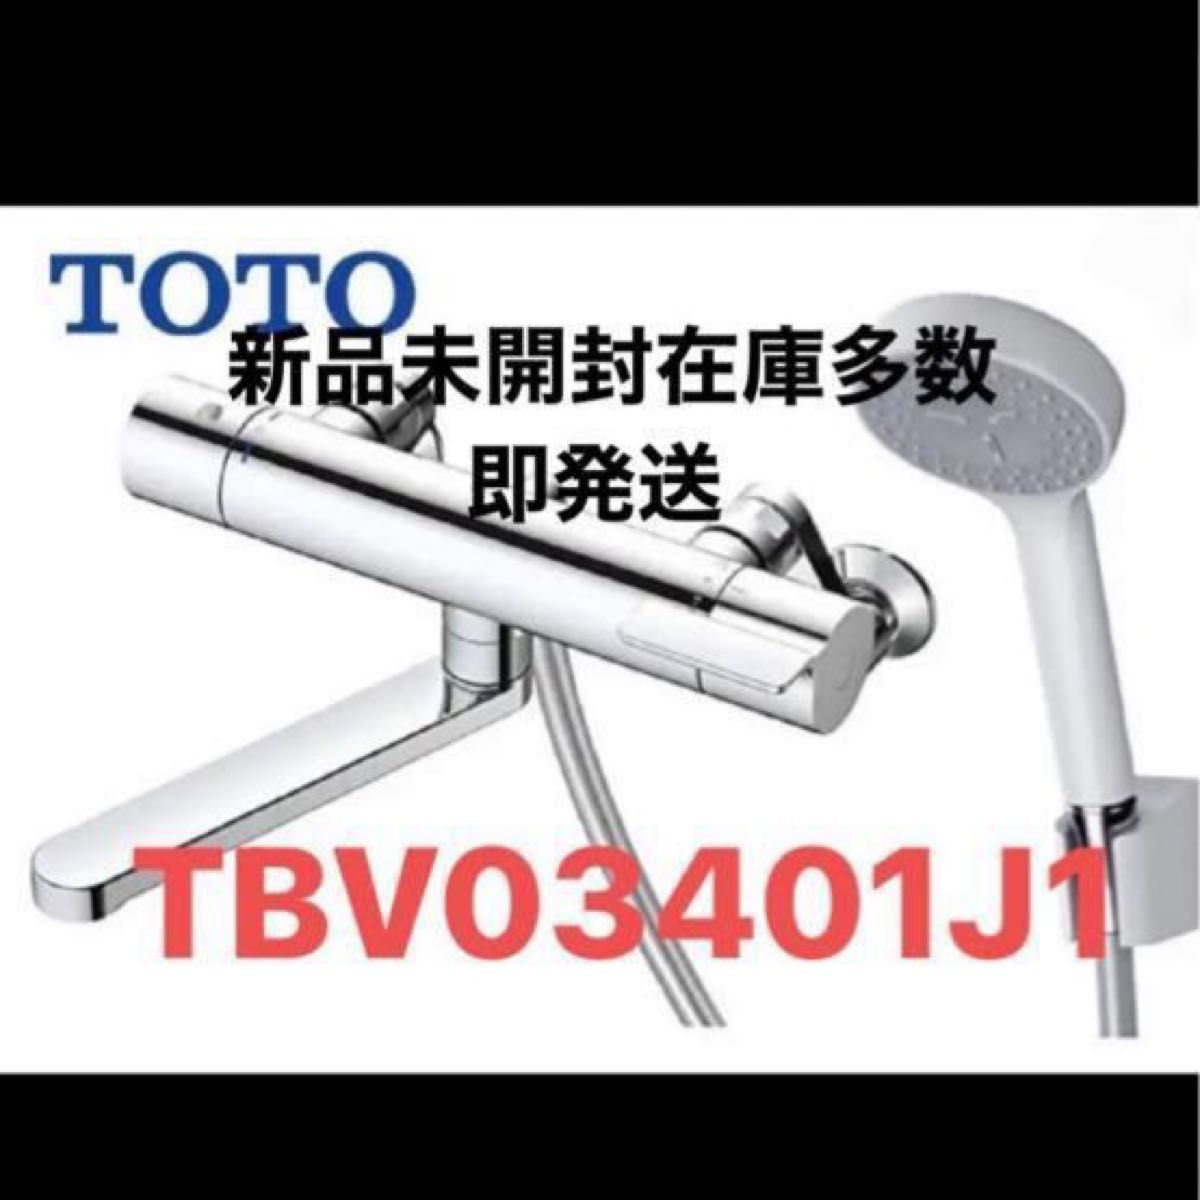 TOTO 浴室用壁付サーモスタット混合水栓TBV03401J1 最新モデル 2台